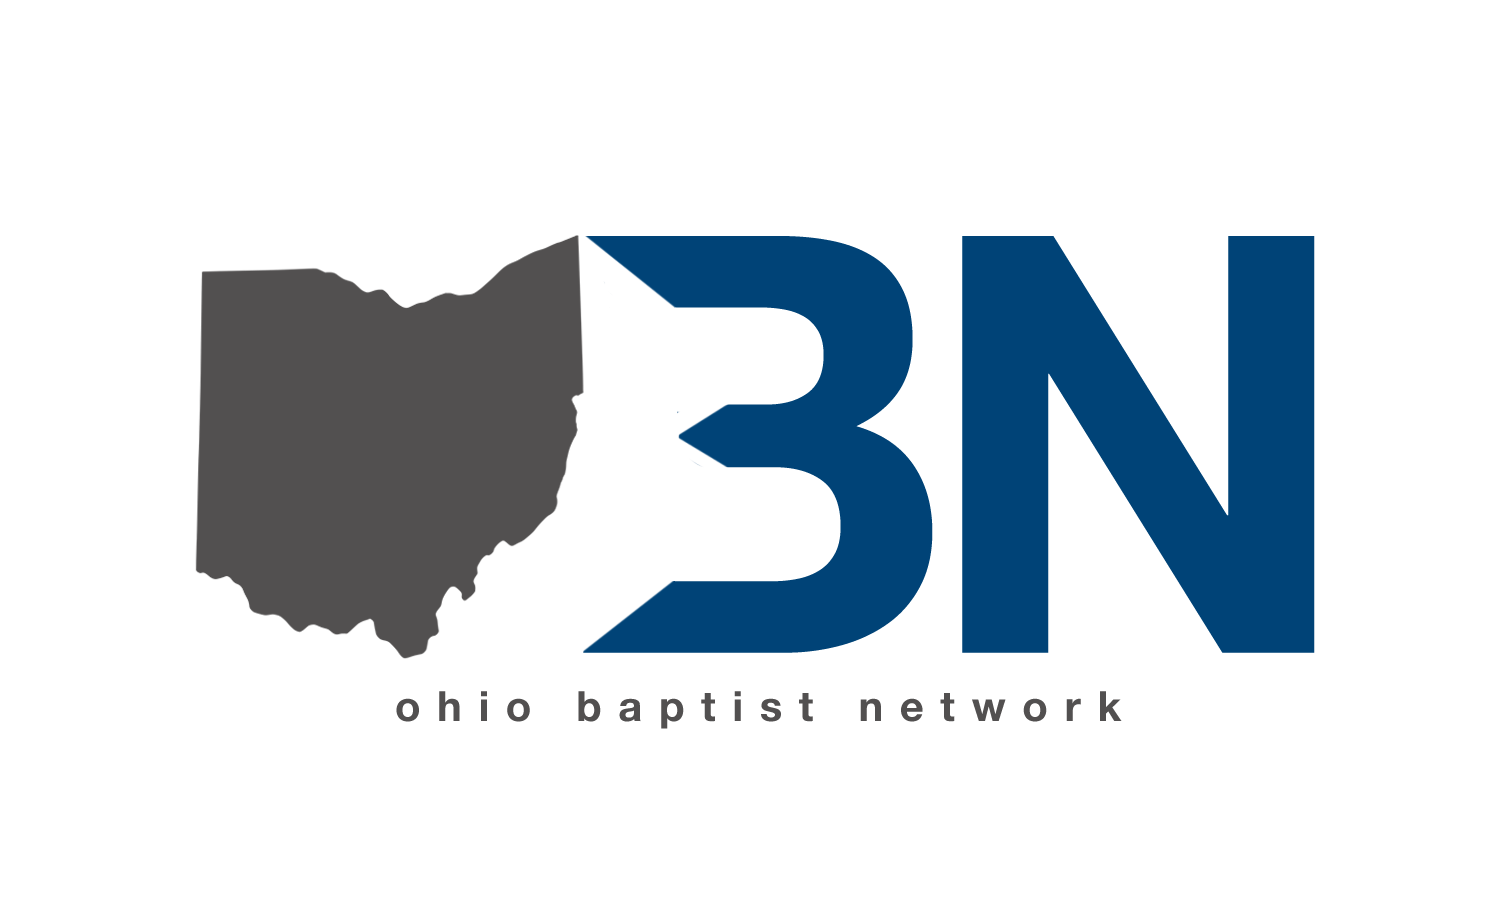 Ohio Baptist Network